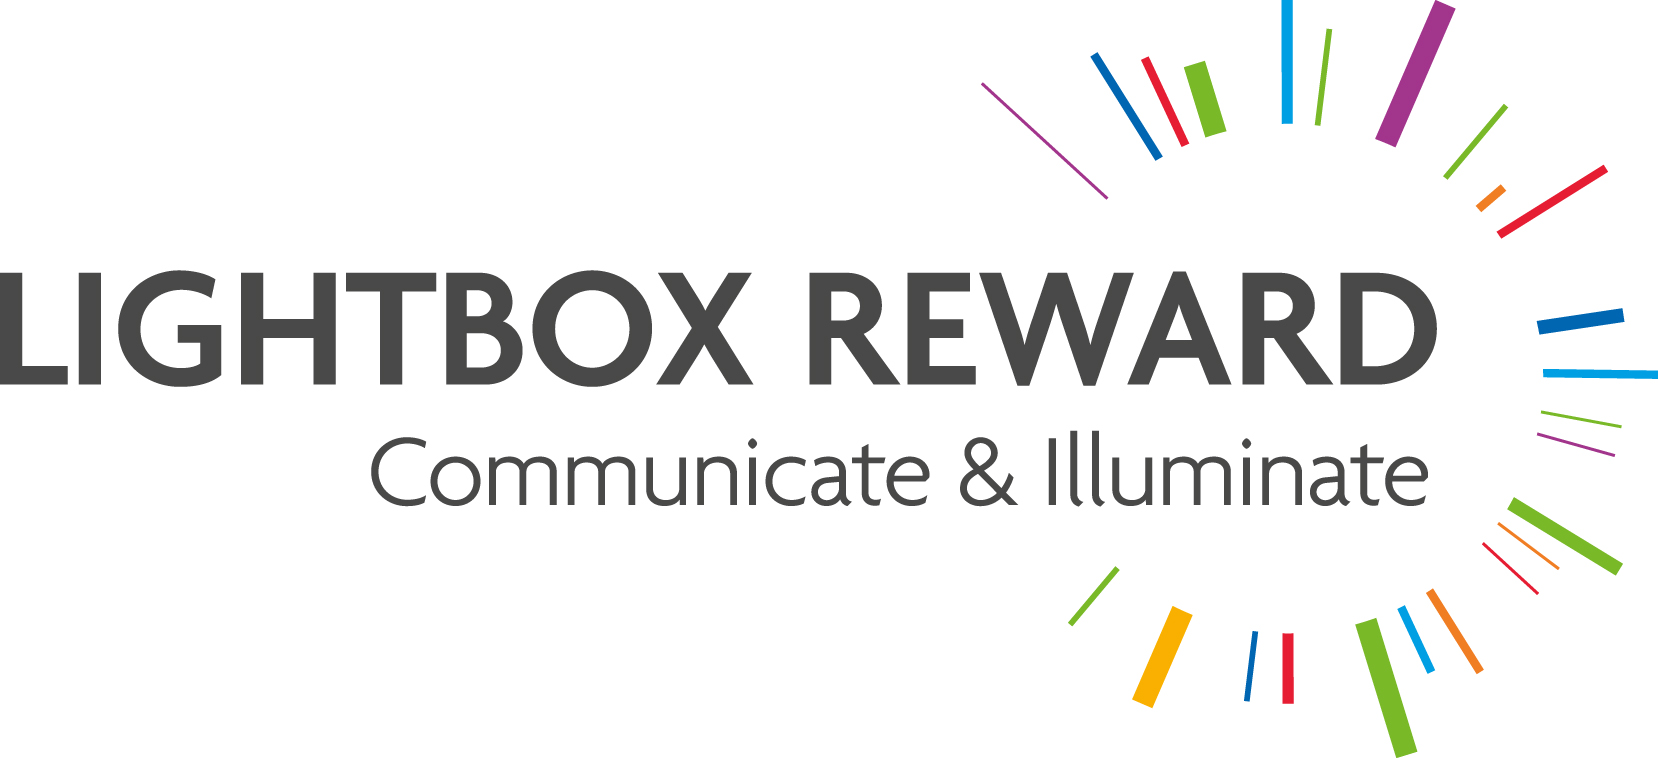 Lightbox Reward